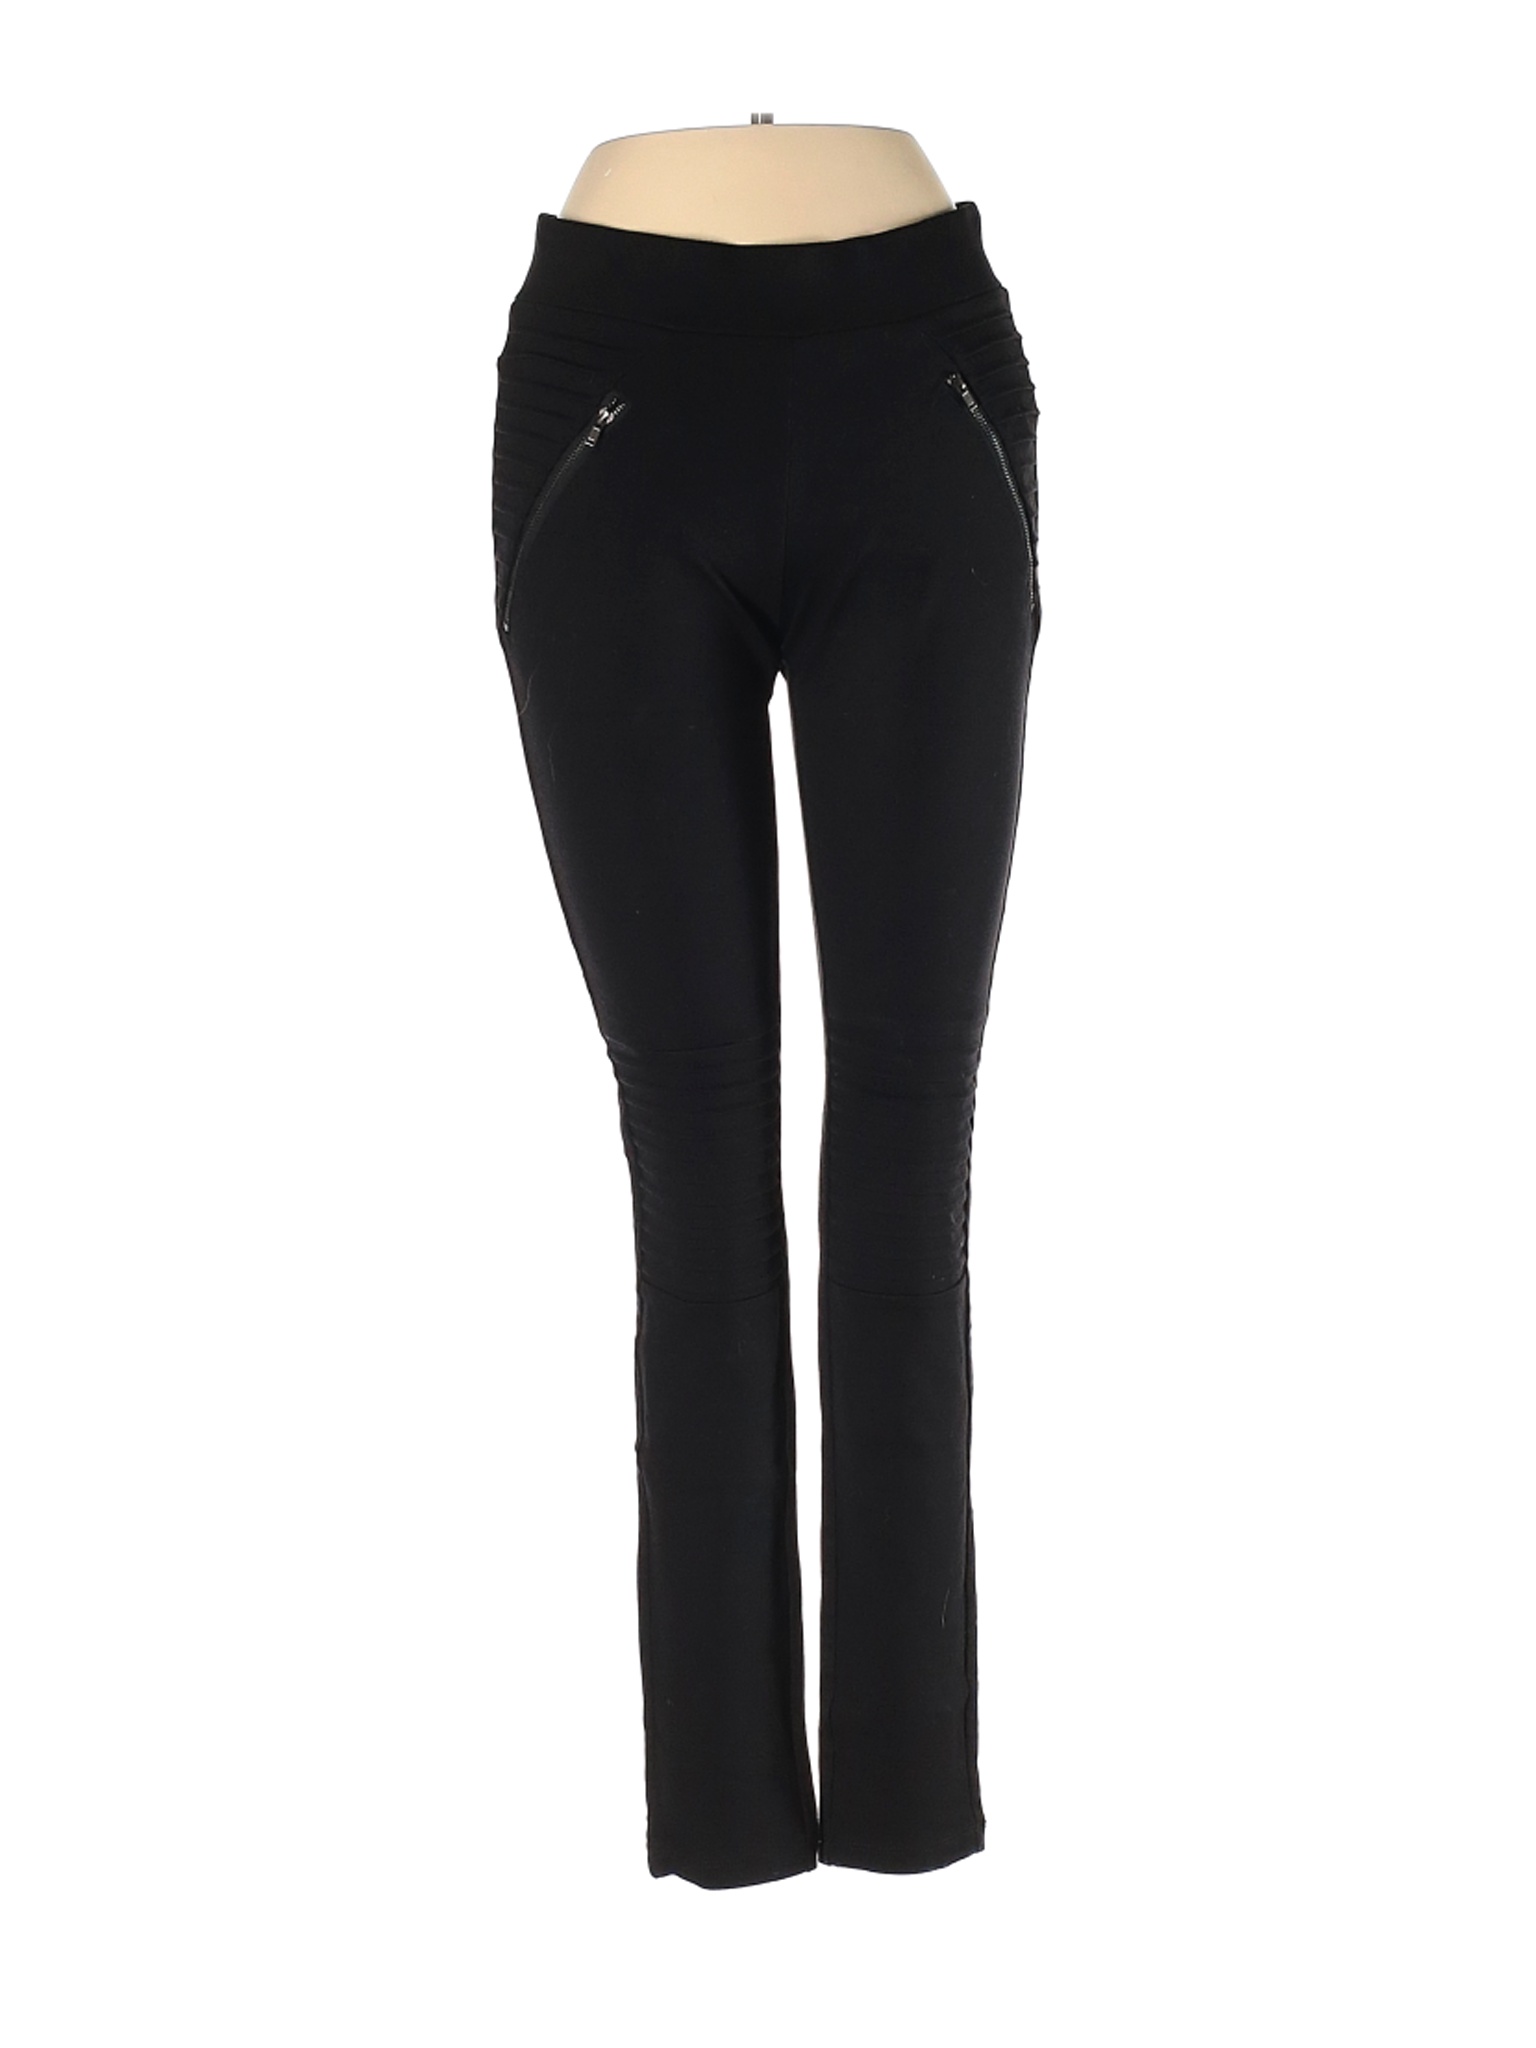 Shinestar Women Black Casual Pants S | eBay